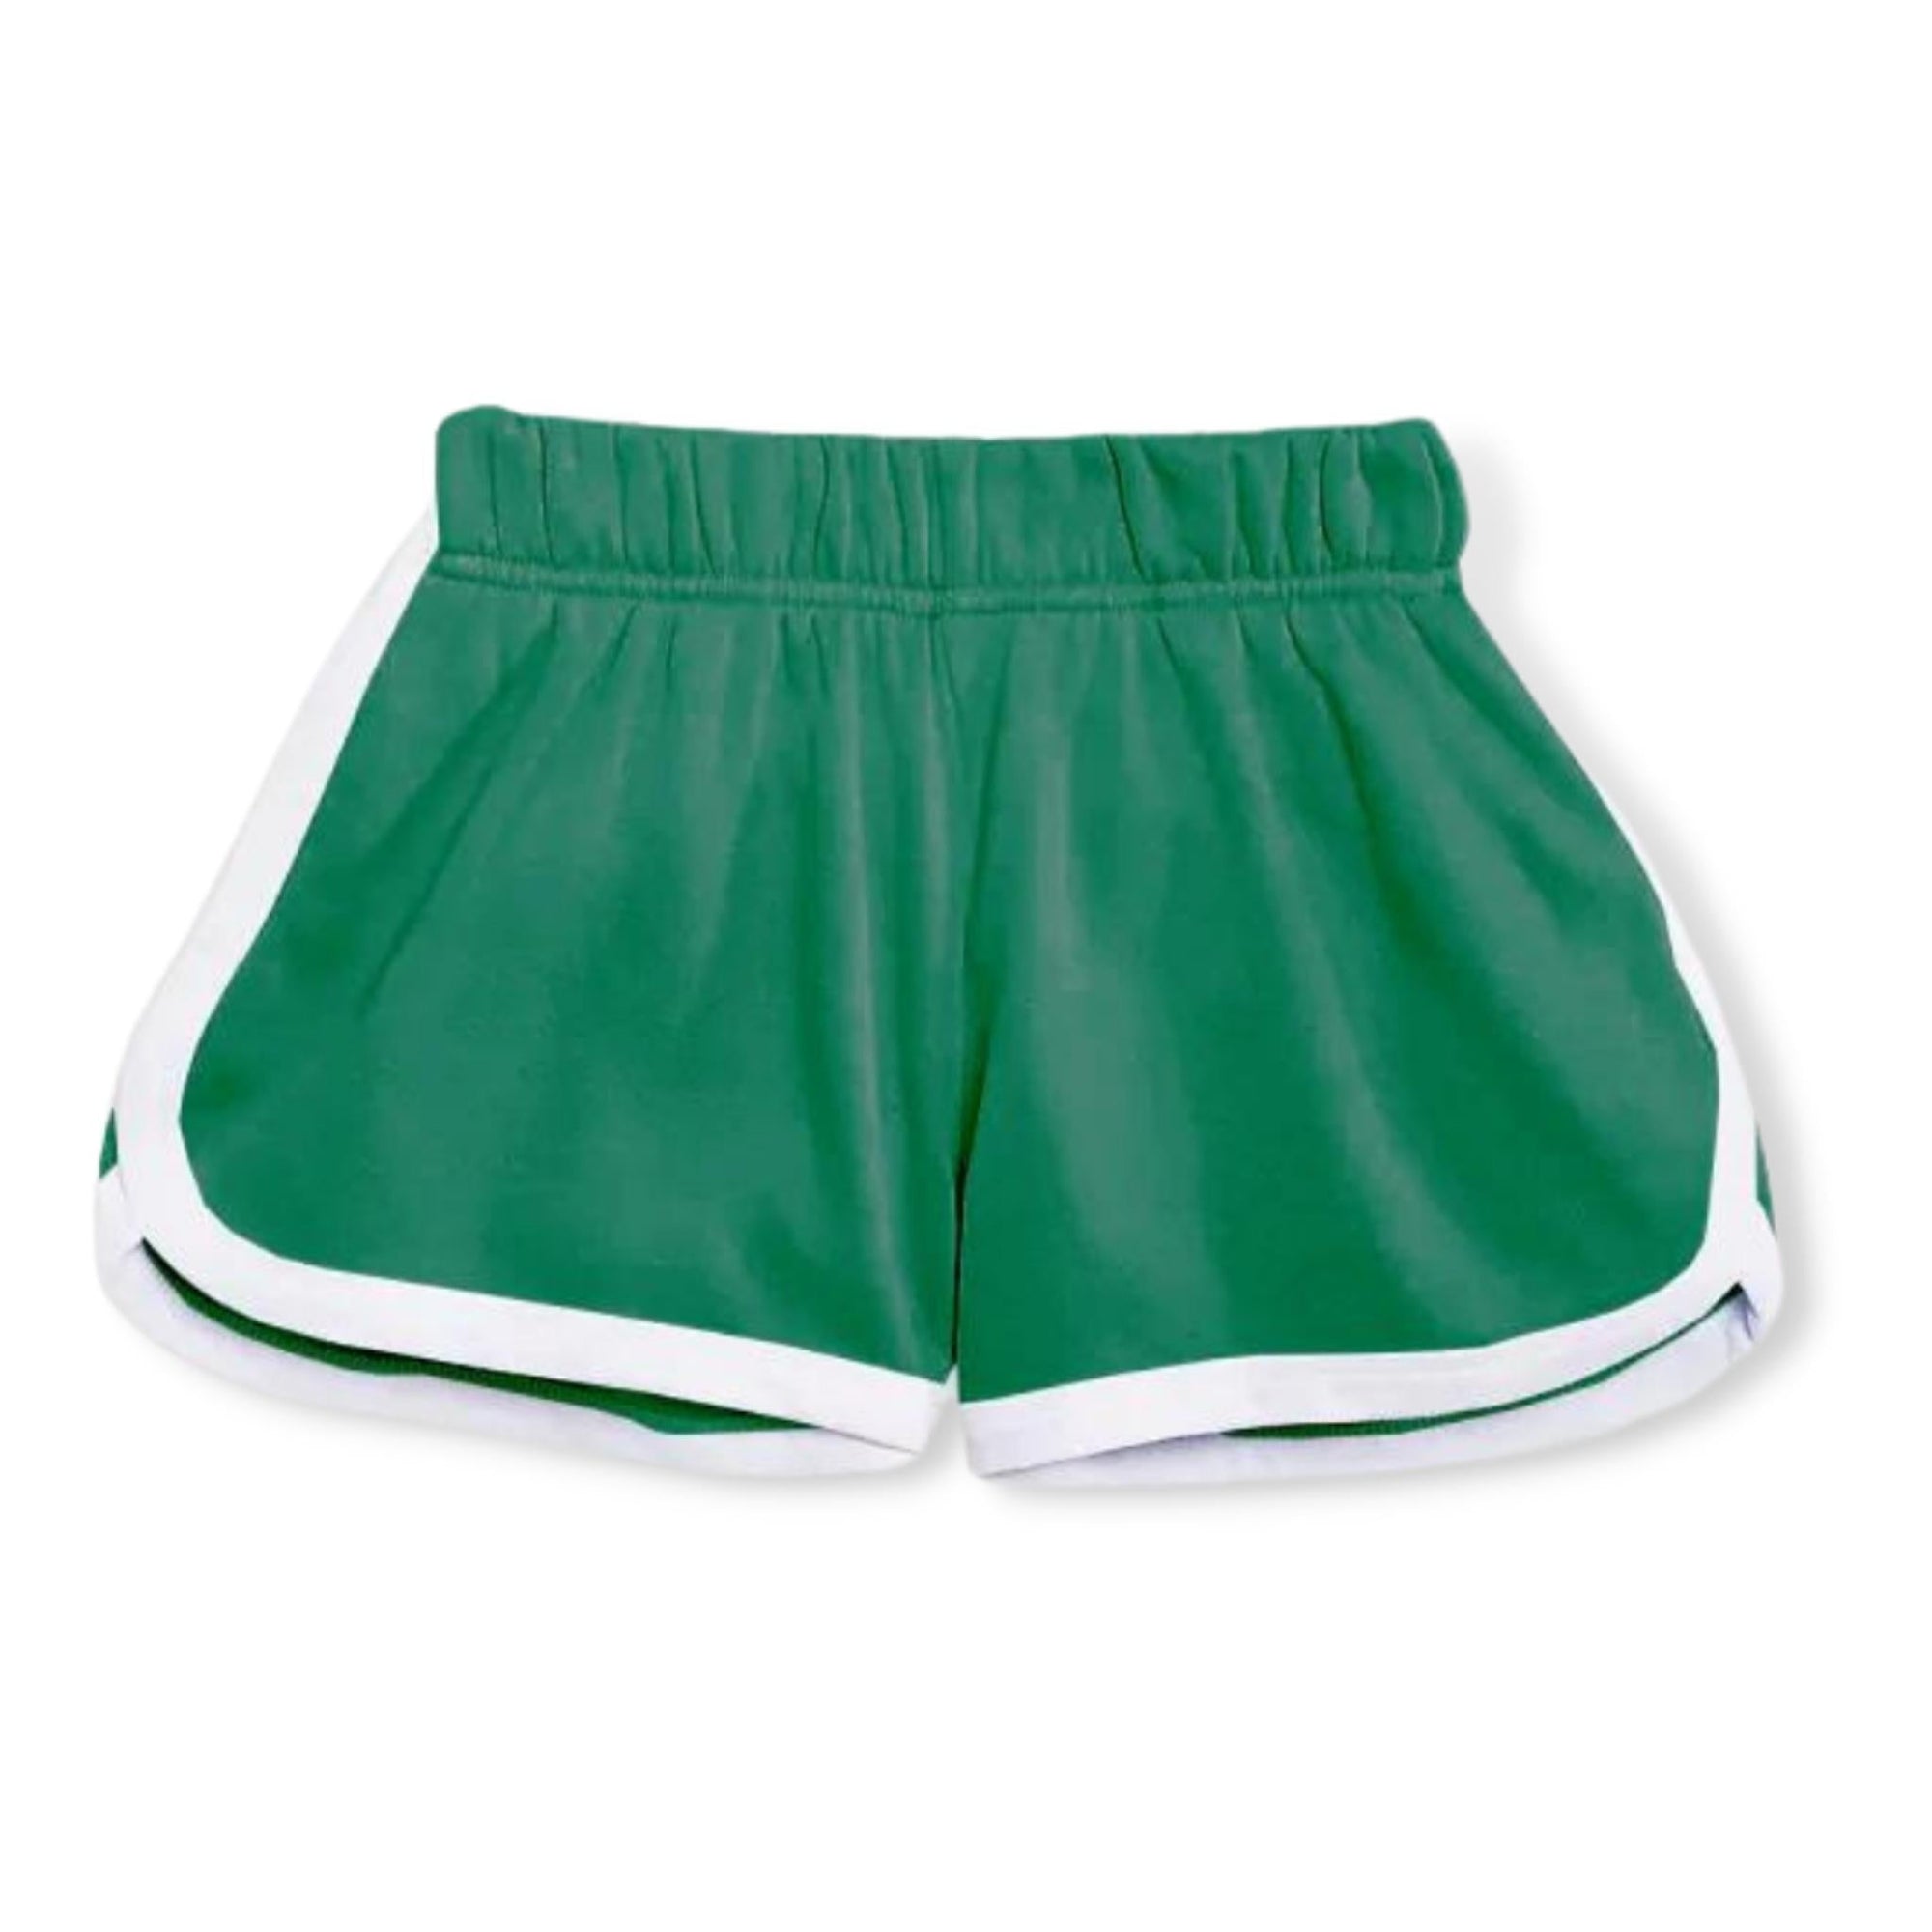 KatieJNYC Emerald Green Kimmie Shorts - a Spirit Animal - shorts $30-$60 active Jun 2022 bottoms